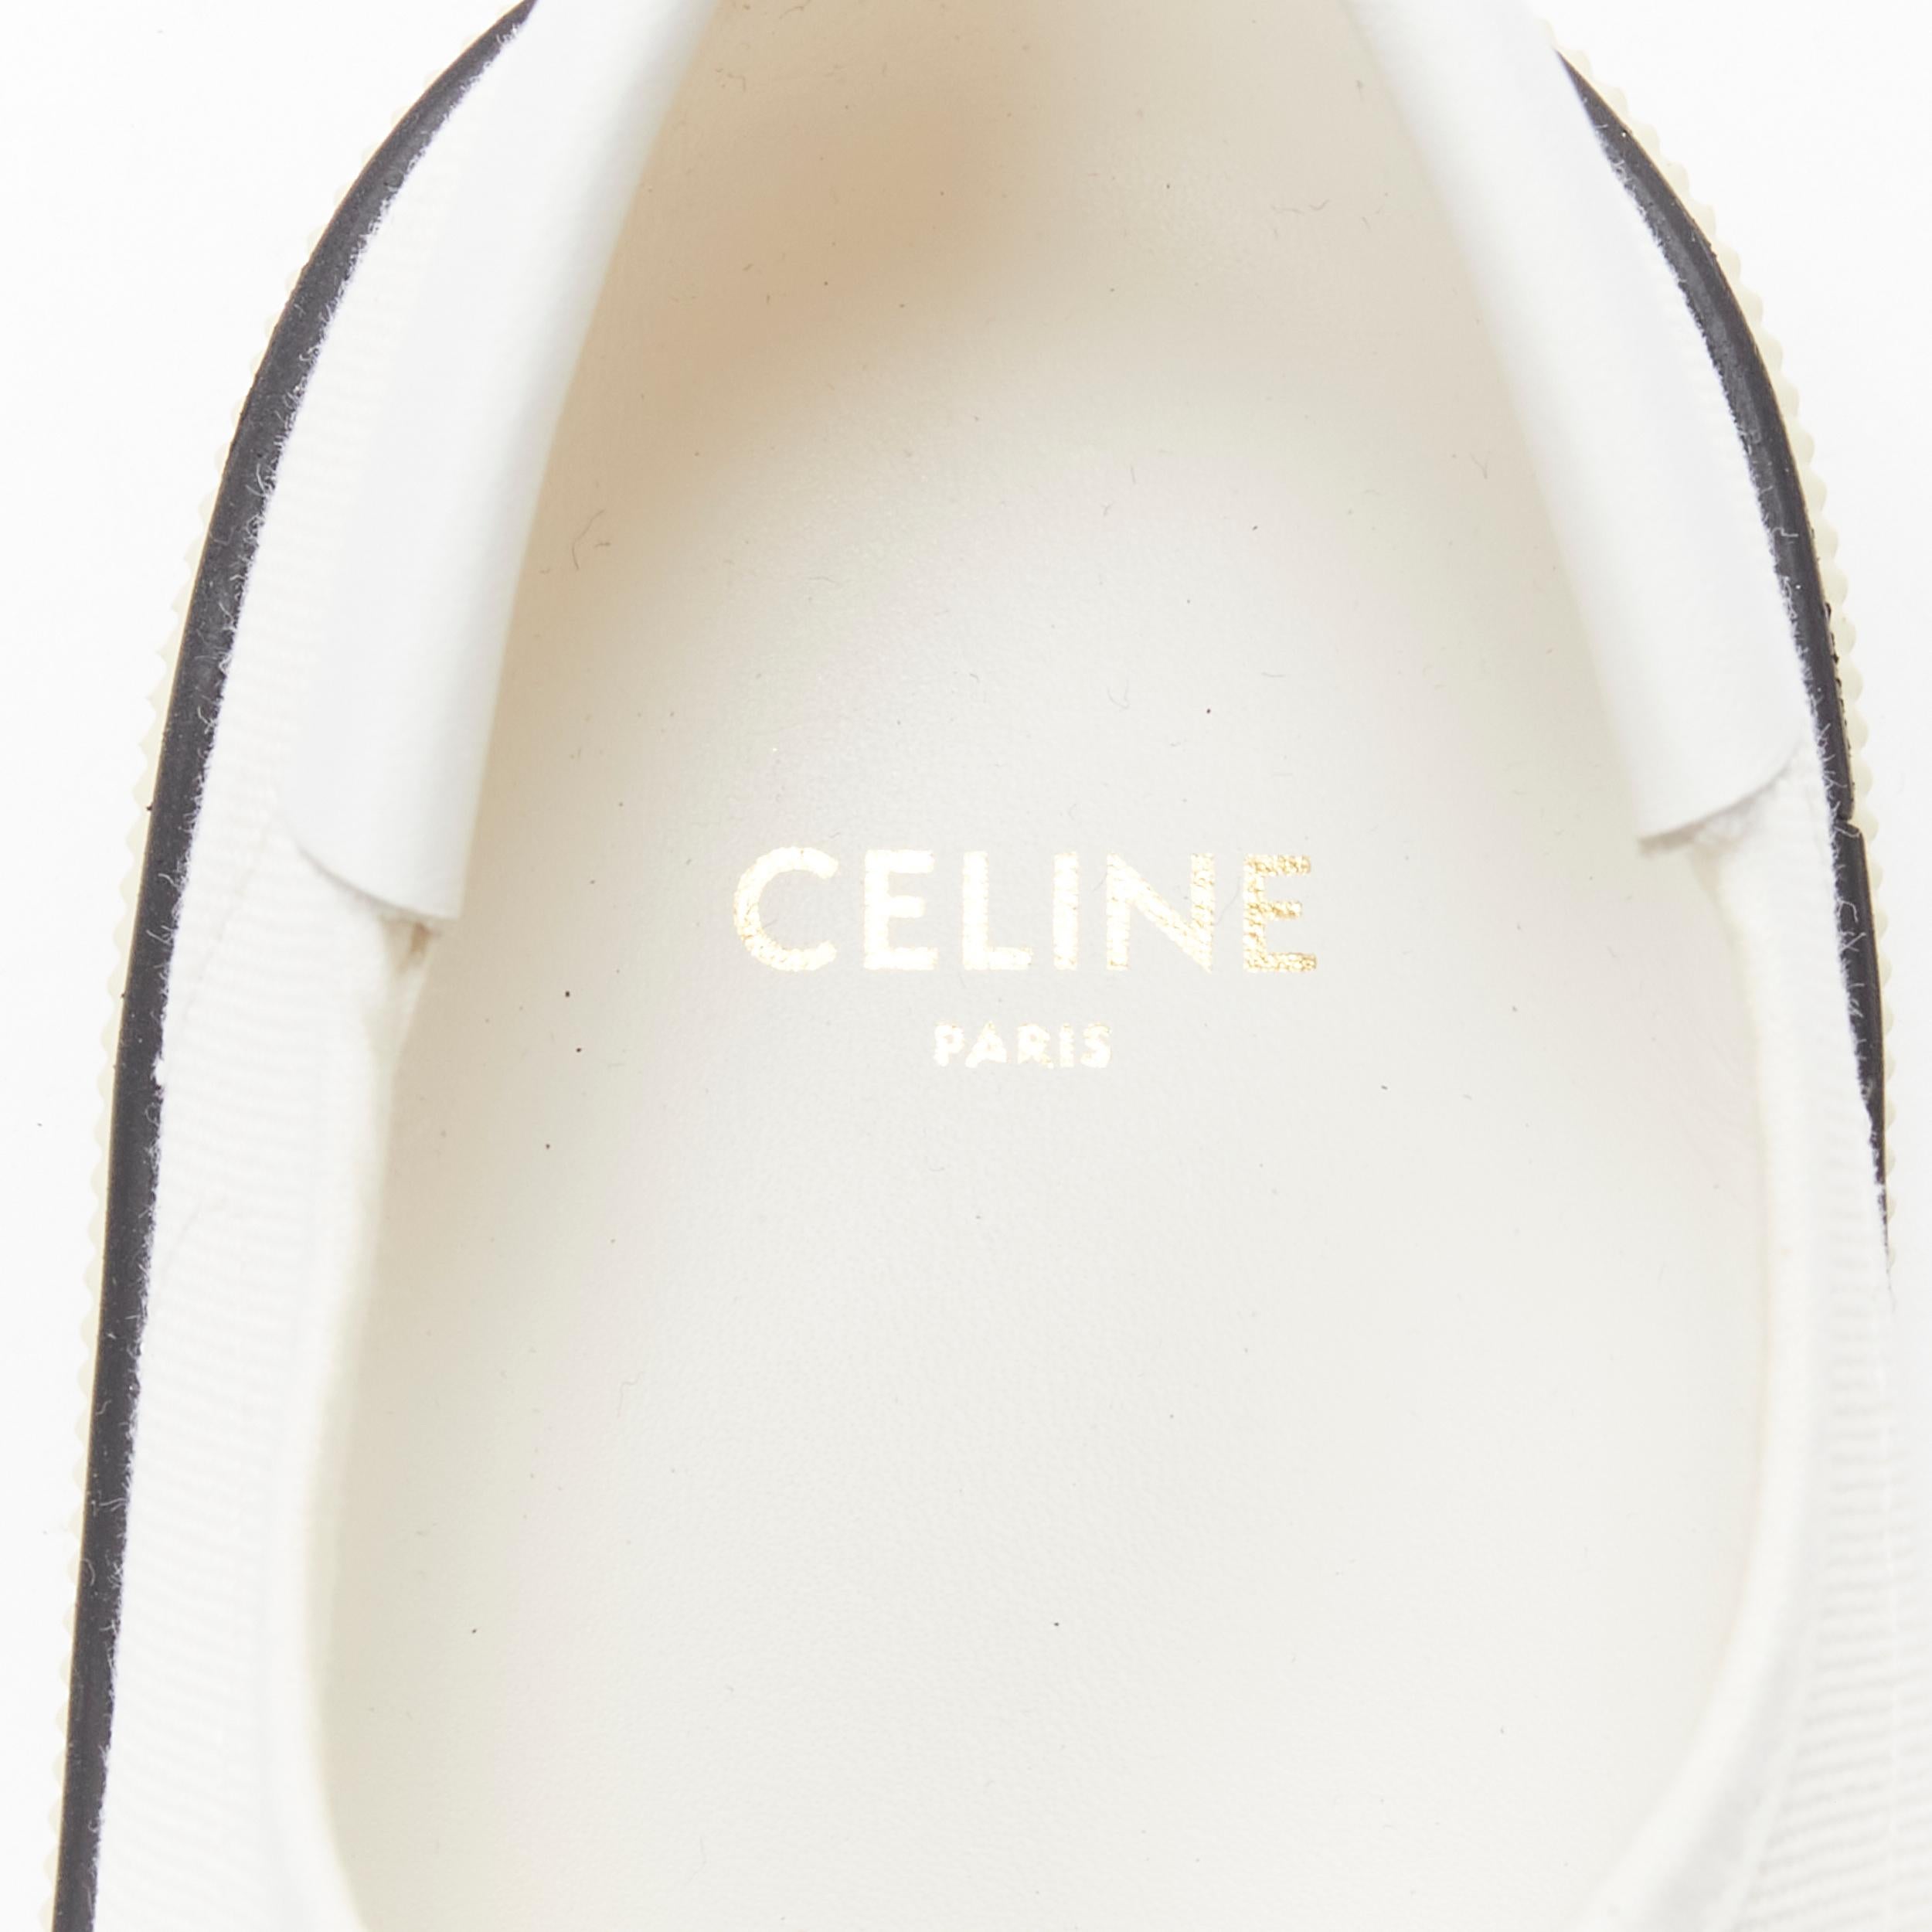 CELINE Hedi Slimane white canvas cream rubber toe cap low top sneaker EU37 5